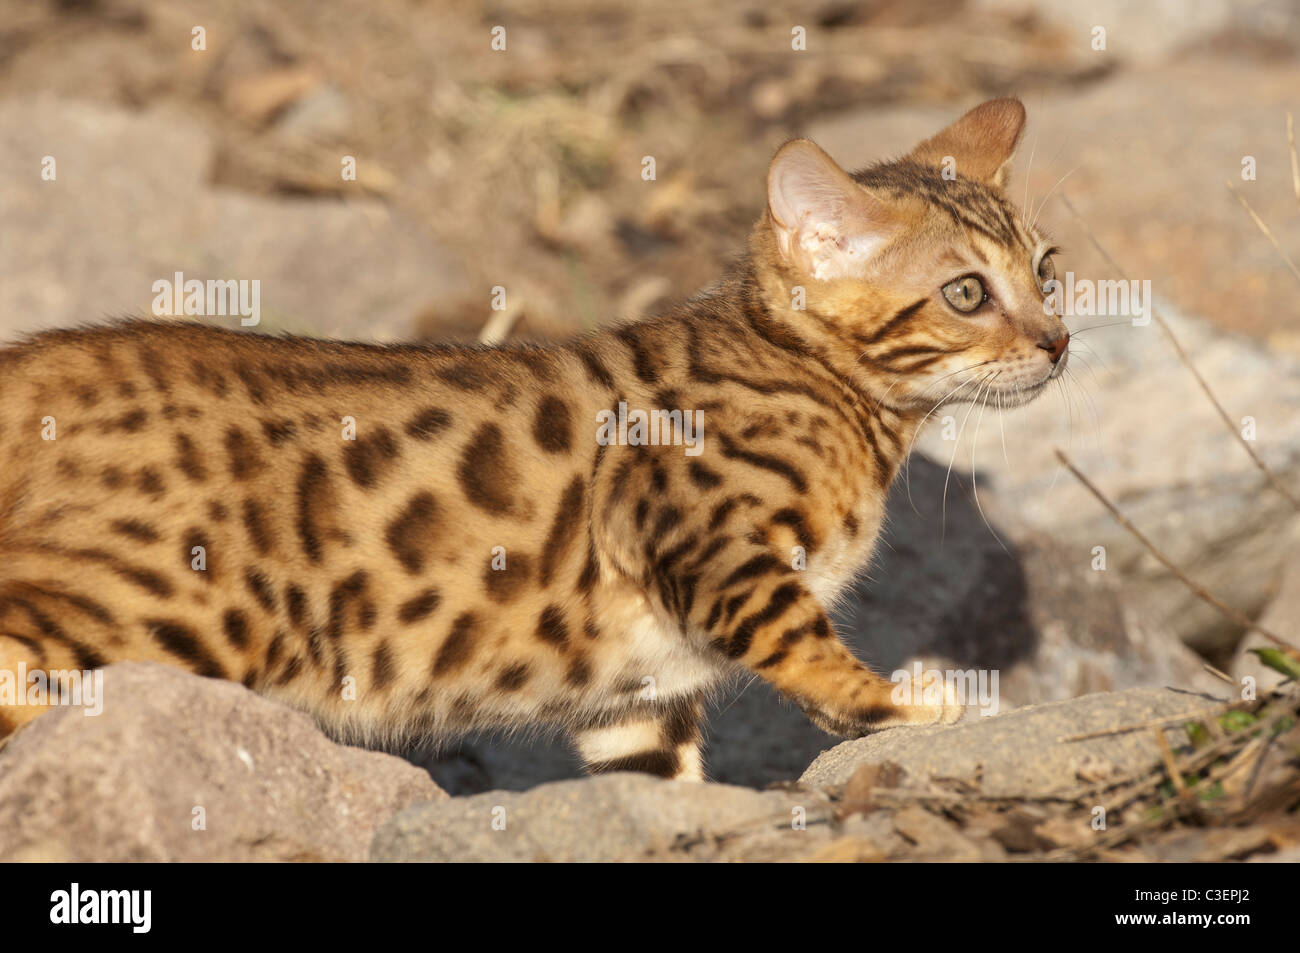 Stock photo of a bengal kitten in a rock garden. Stock Photo